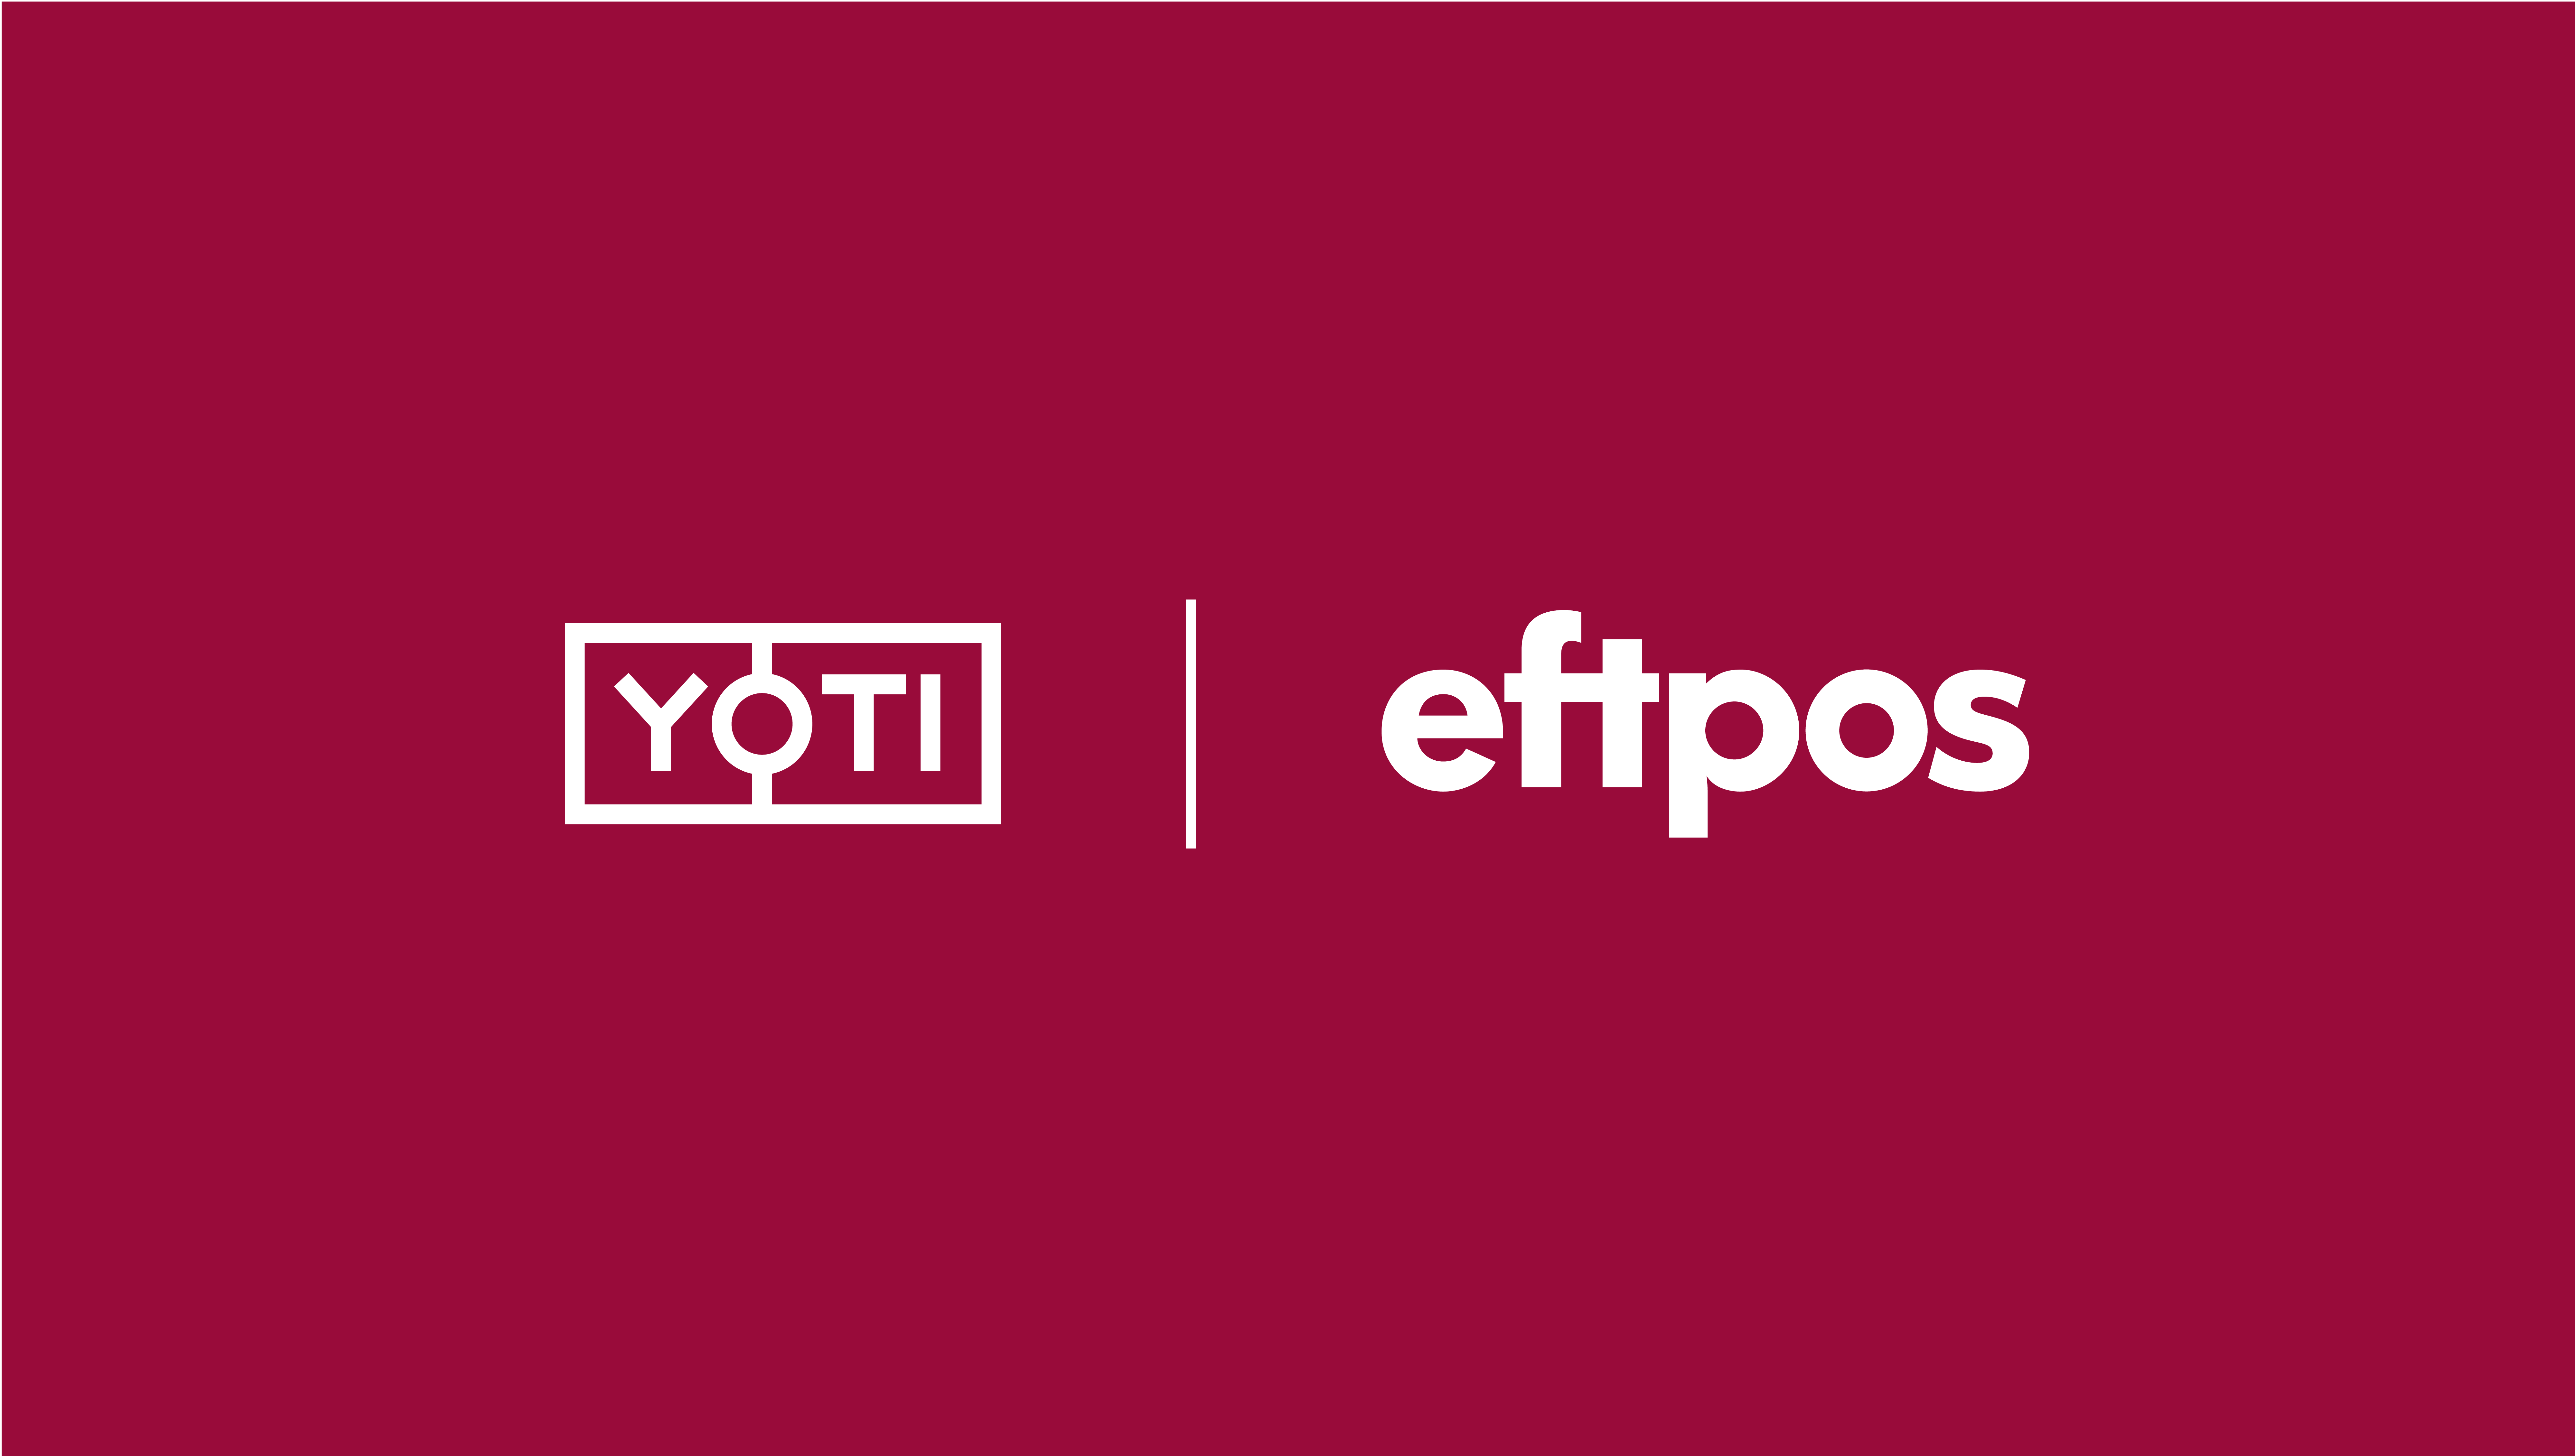 Yoti and Eftpos logos presented together